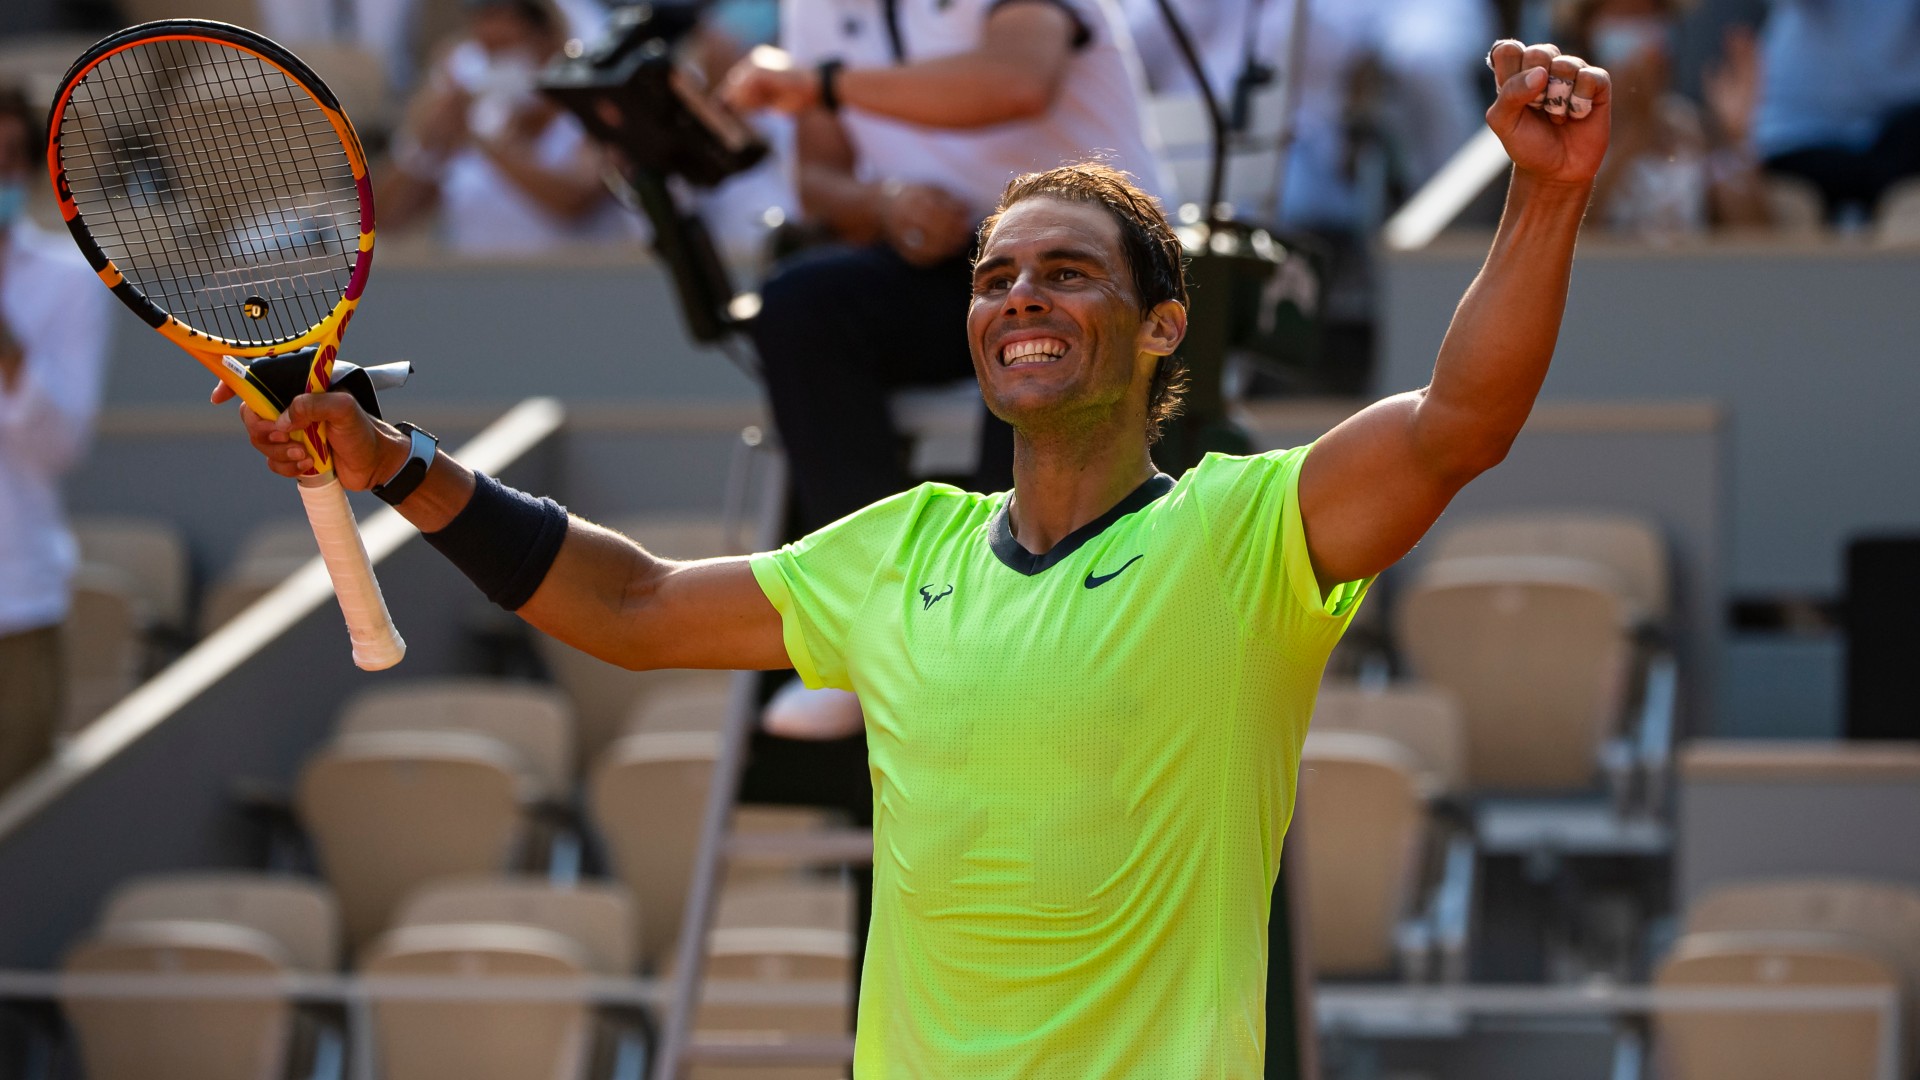 Roland Garros 2021: Rafael Nadal beats Diego Schwartzman in four sets